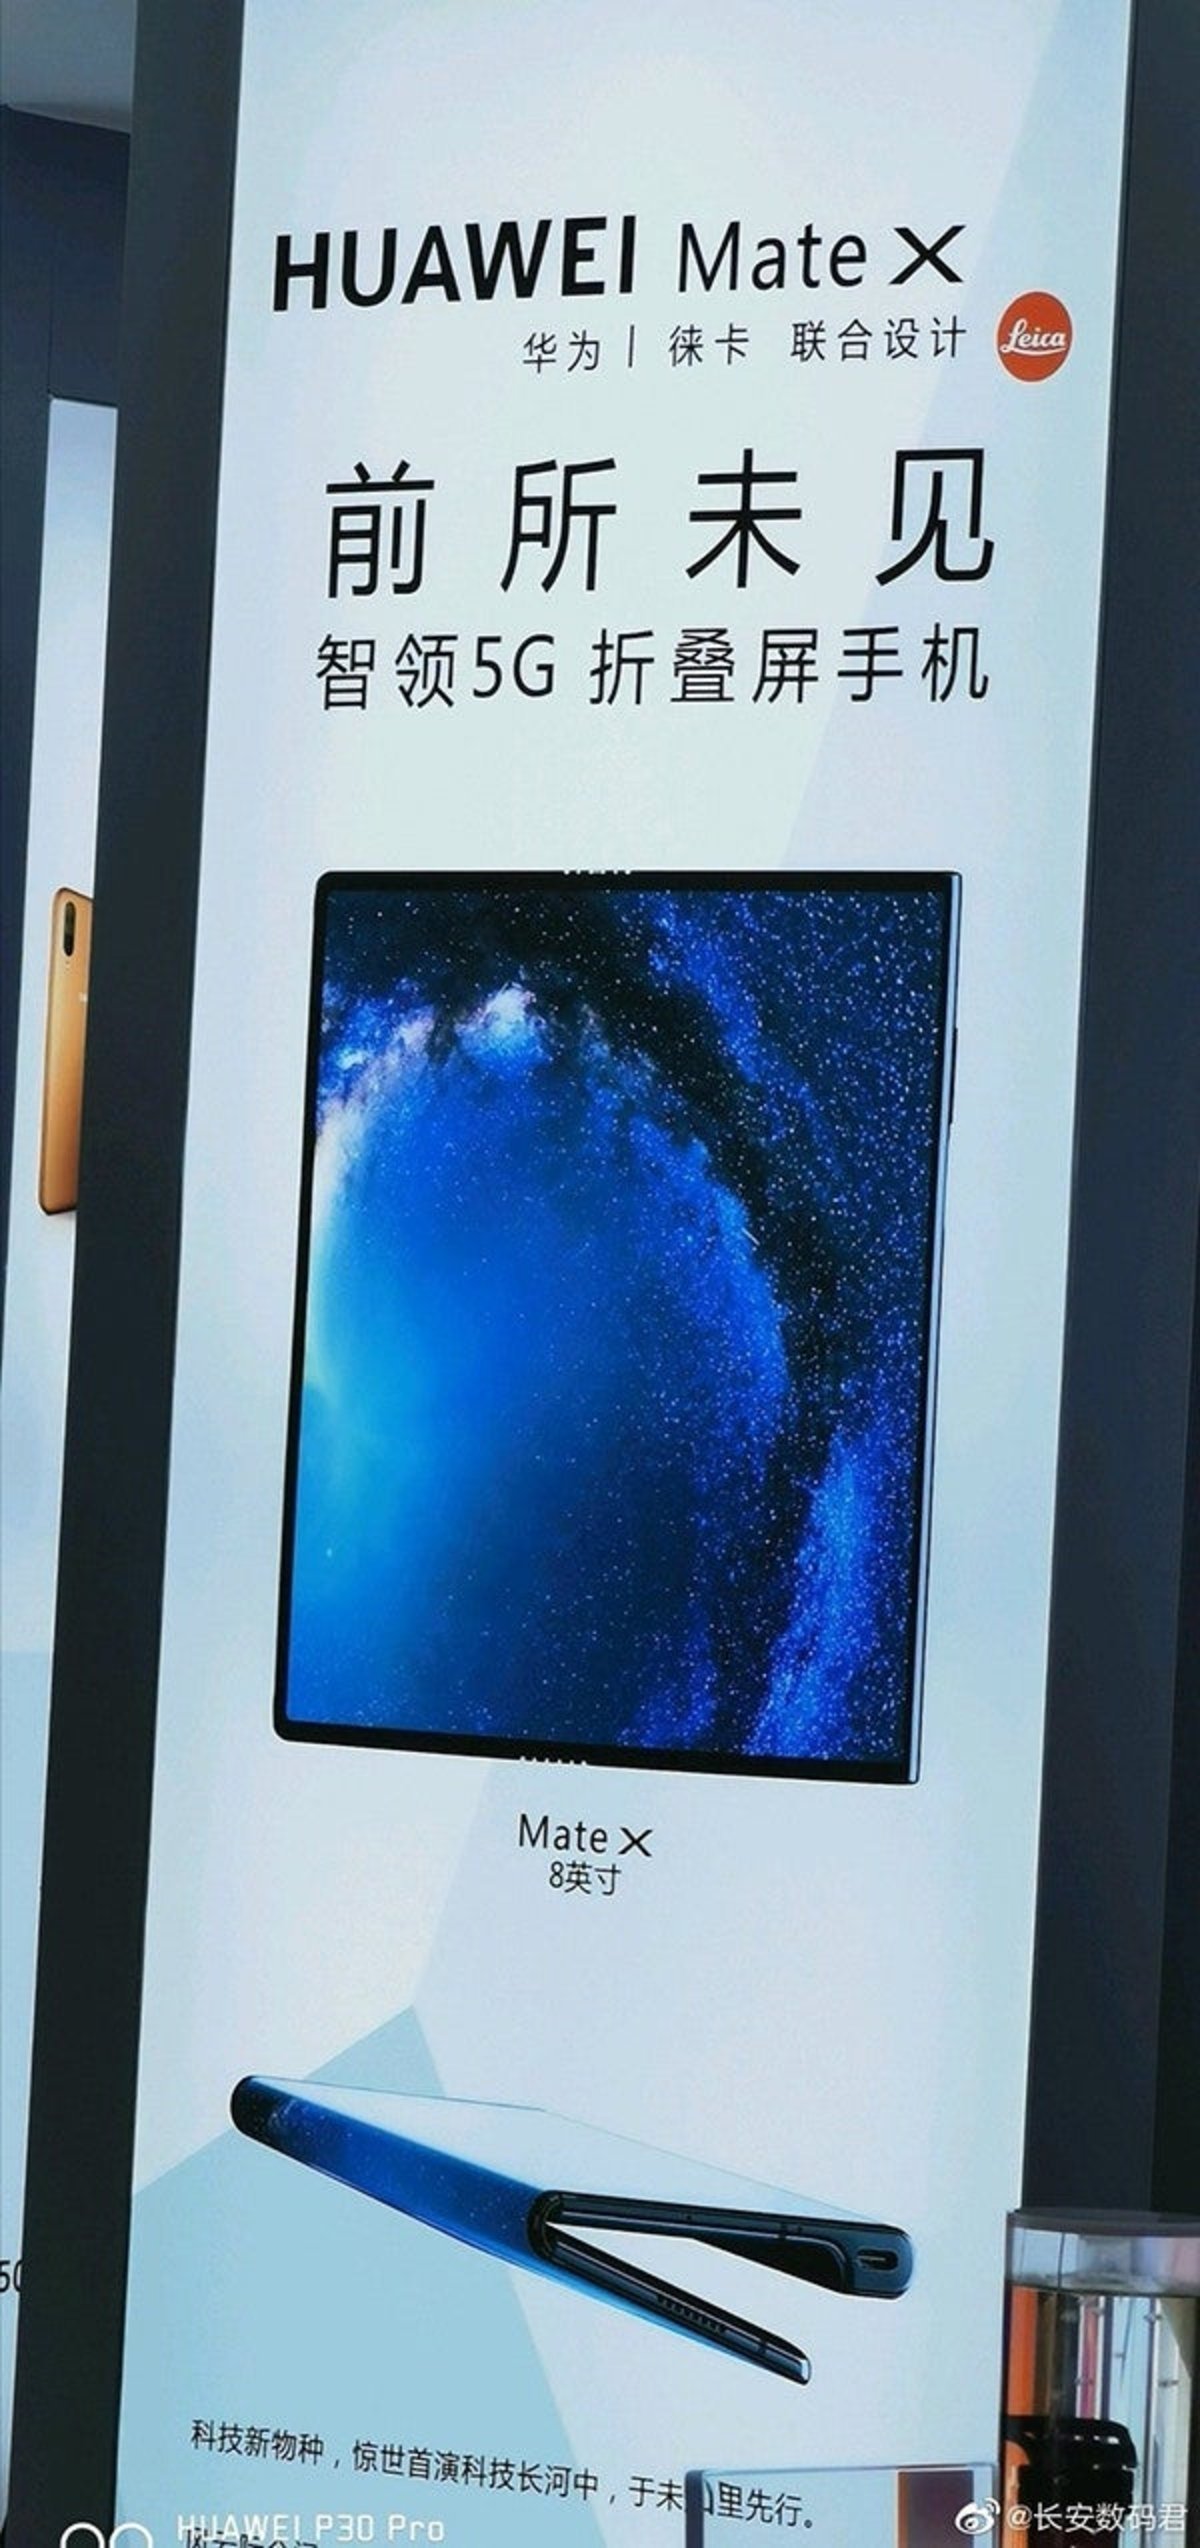 Huawei Mate X poster china